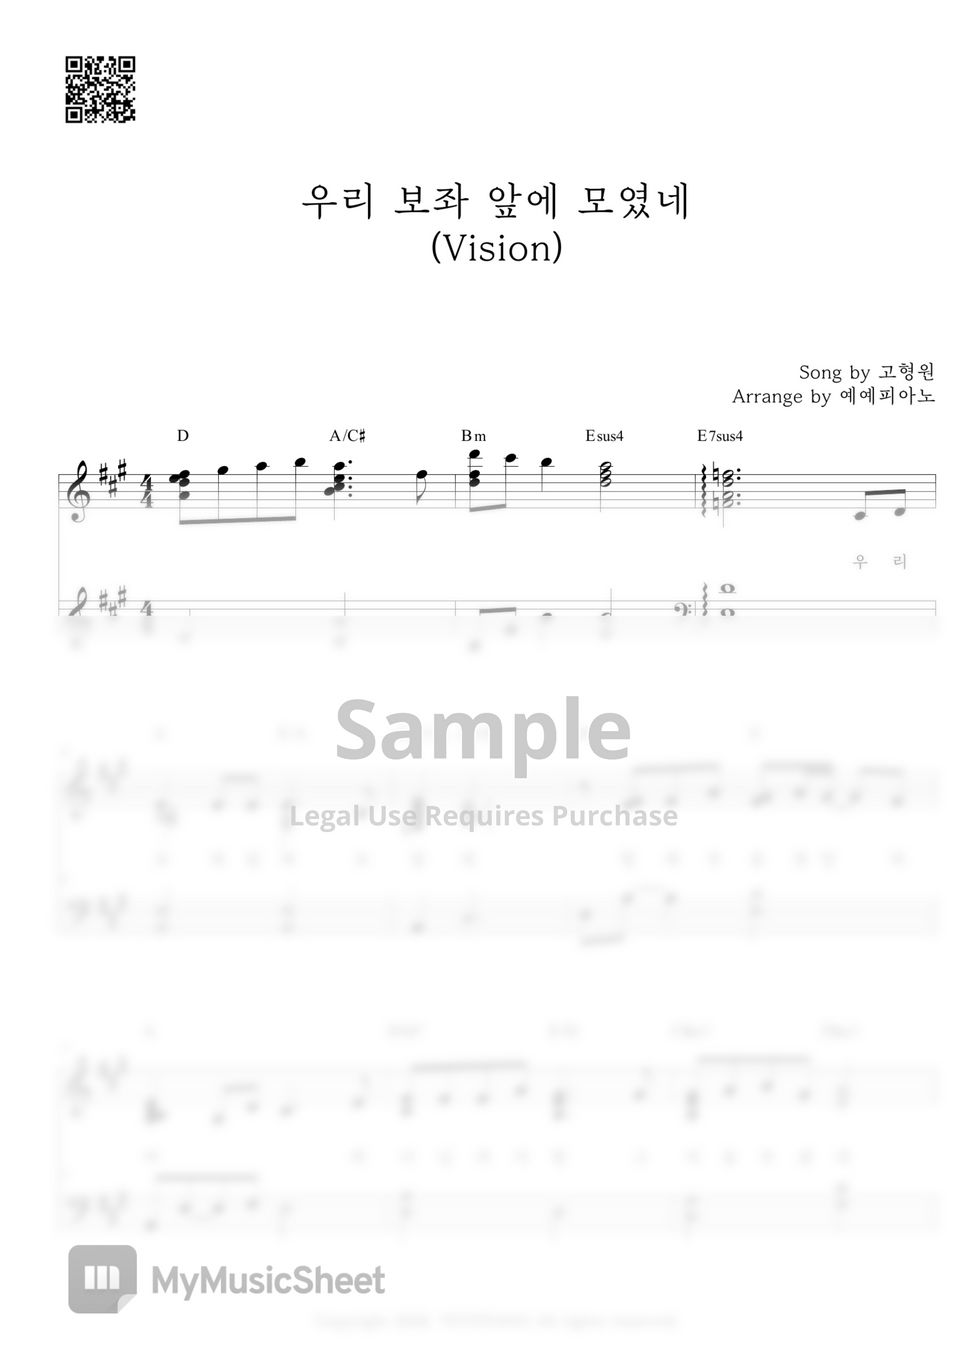 Ko Hyung Won - Vision by YEYE PIANO